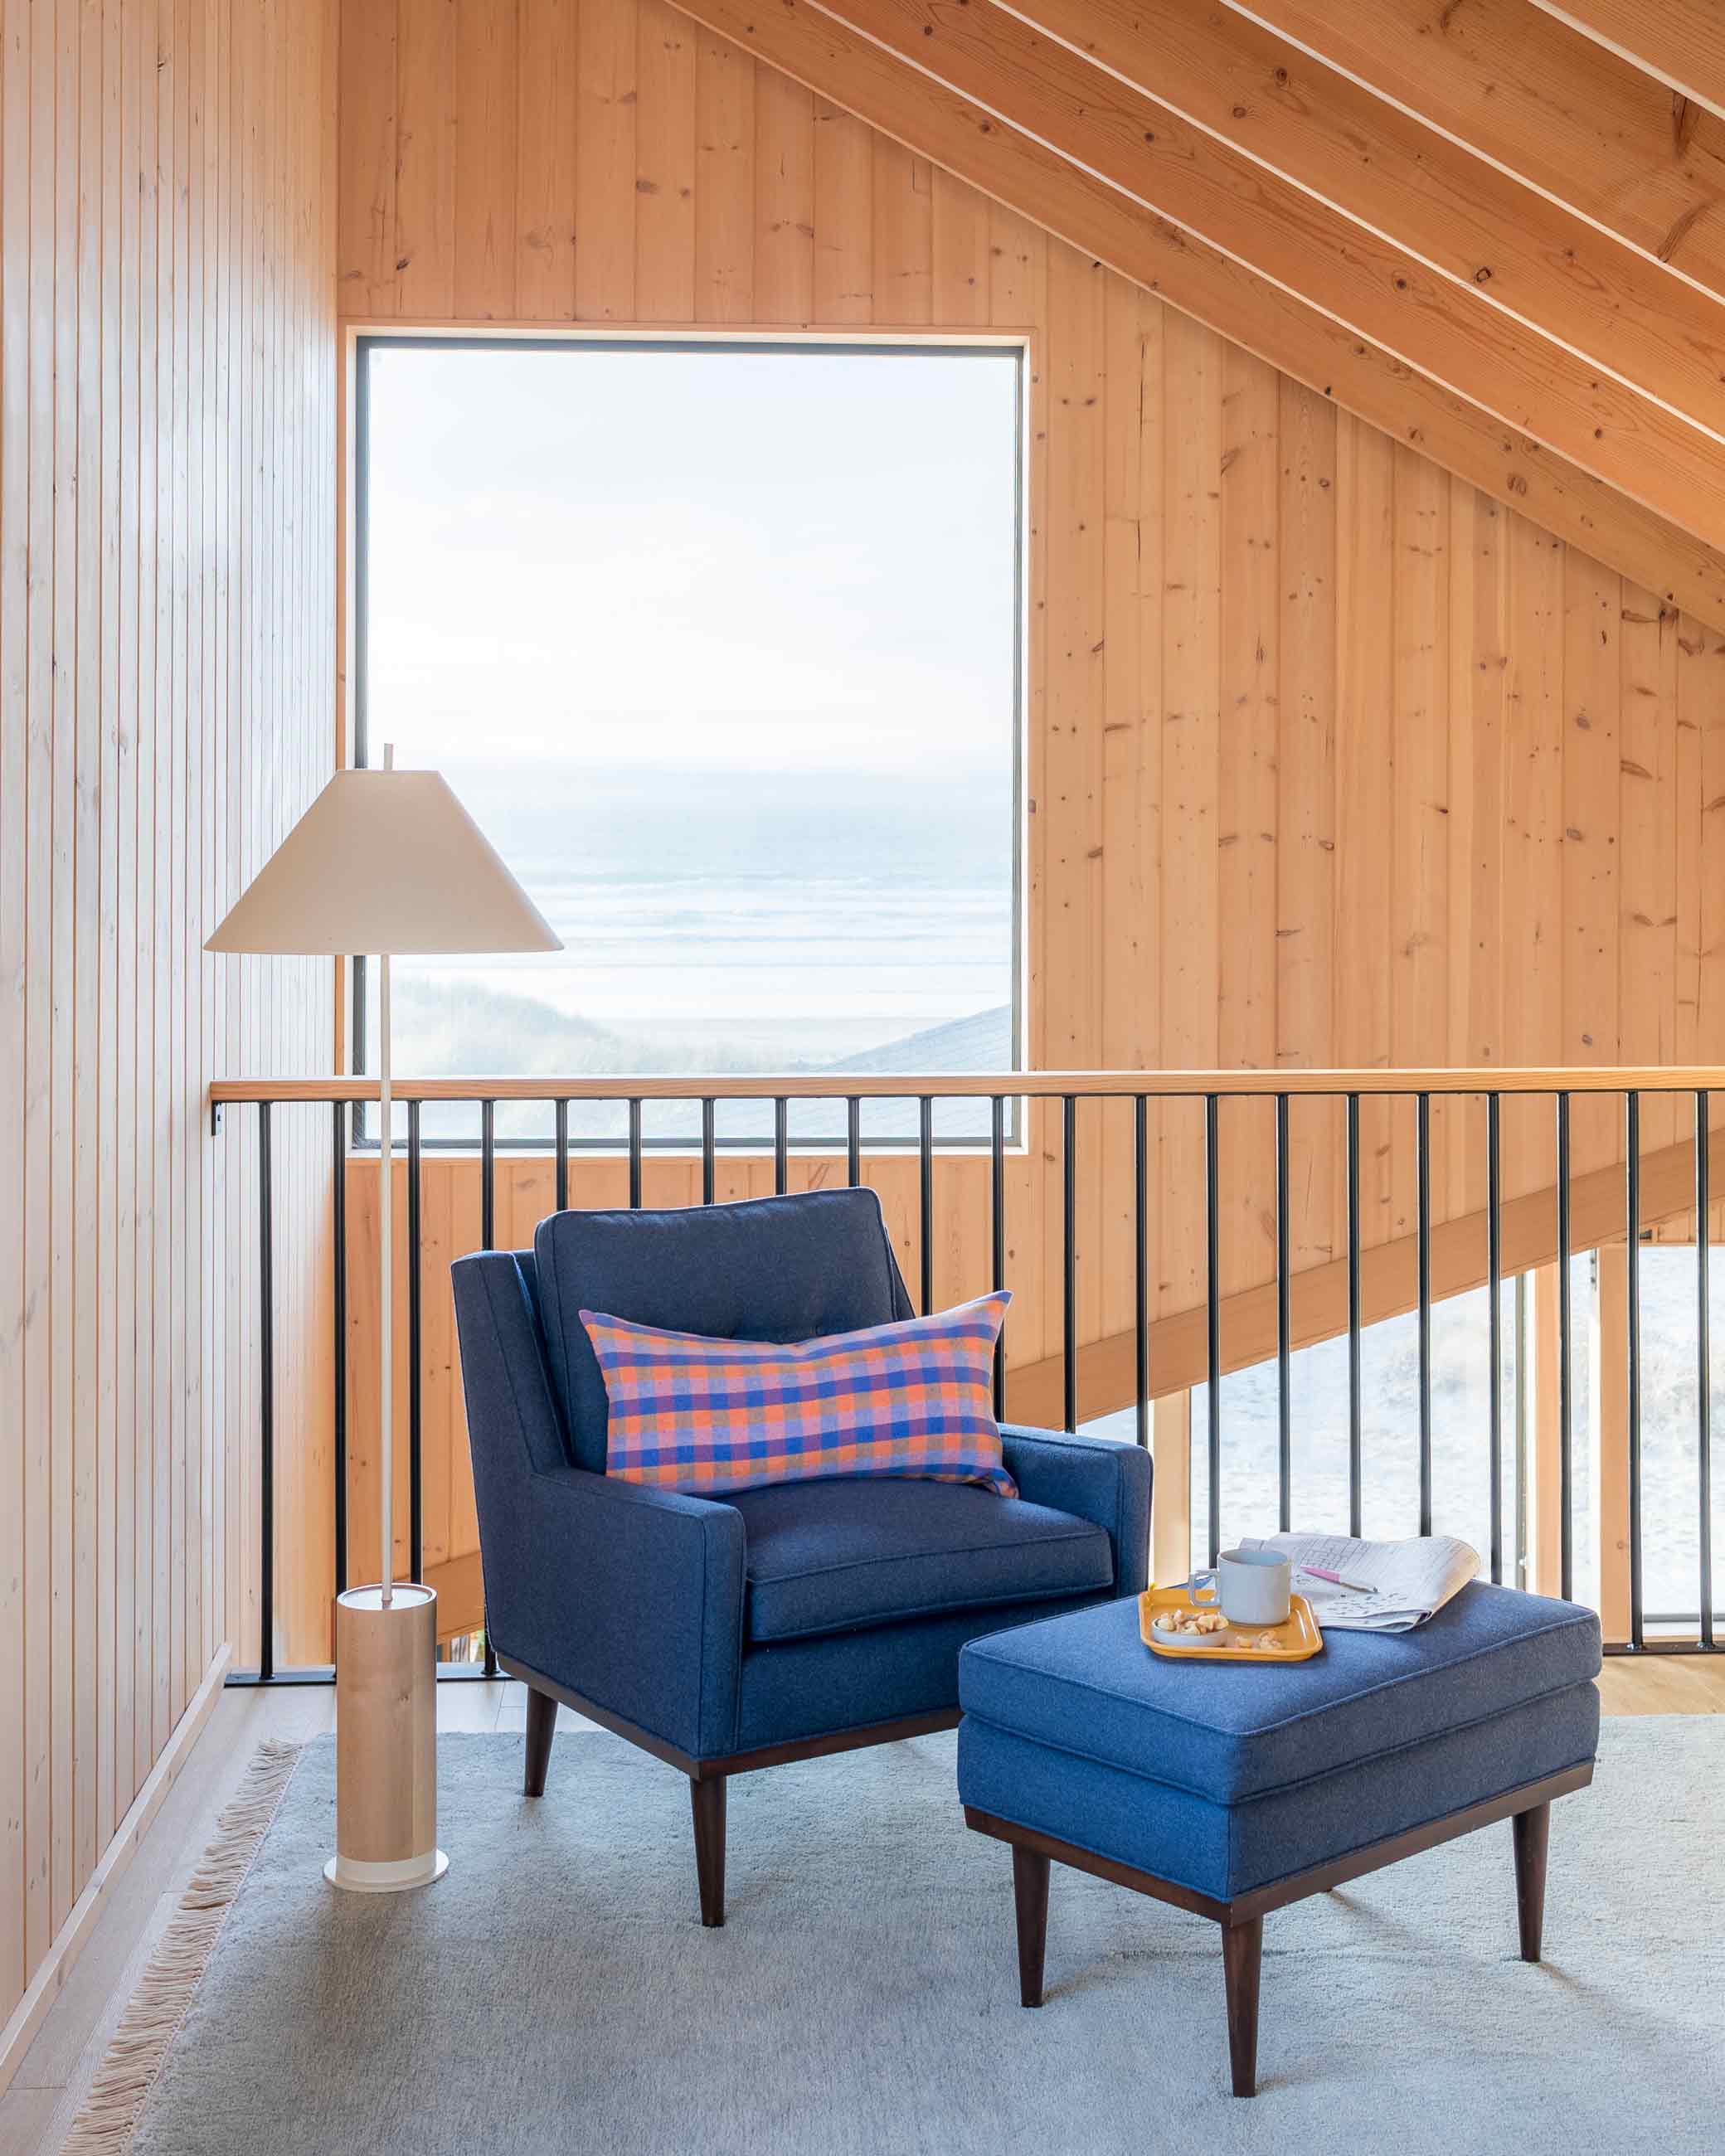 Blue armchair in ocean house loft space.